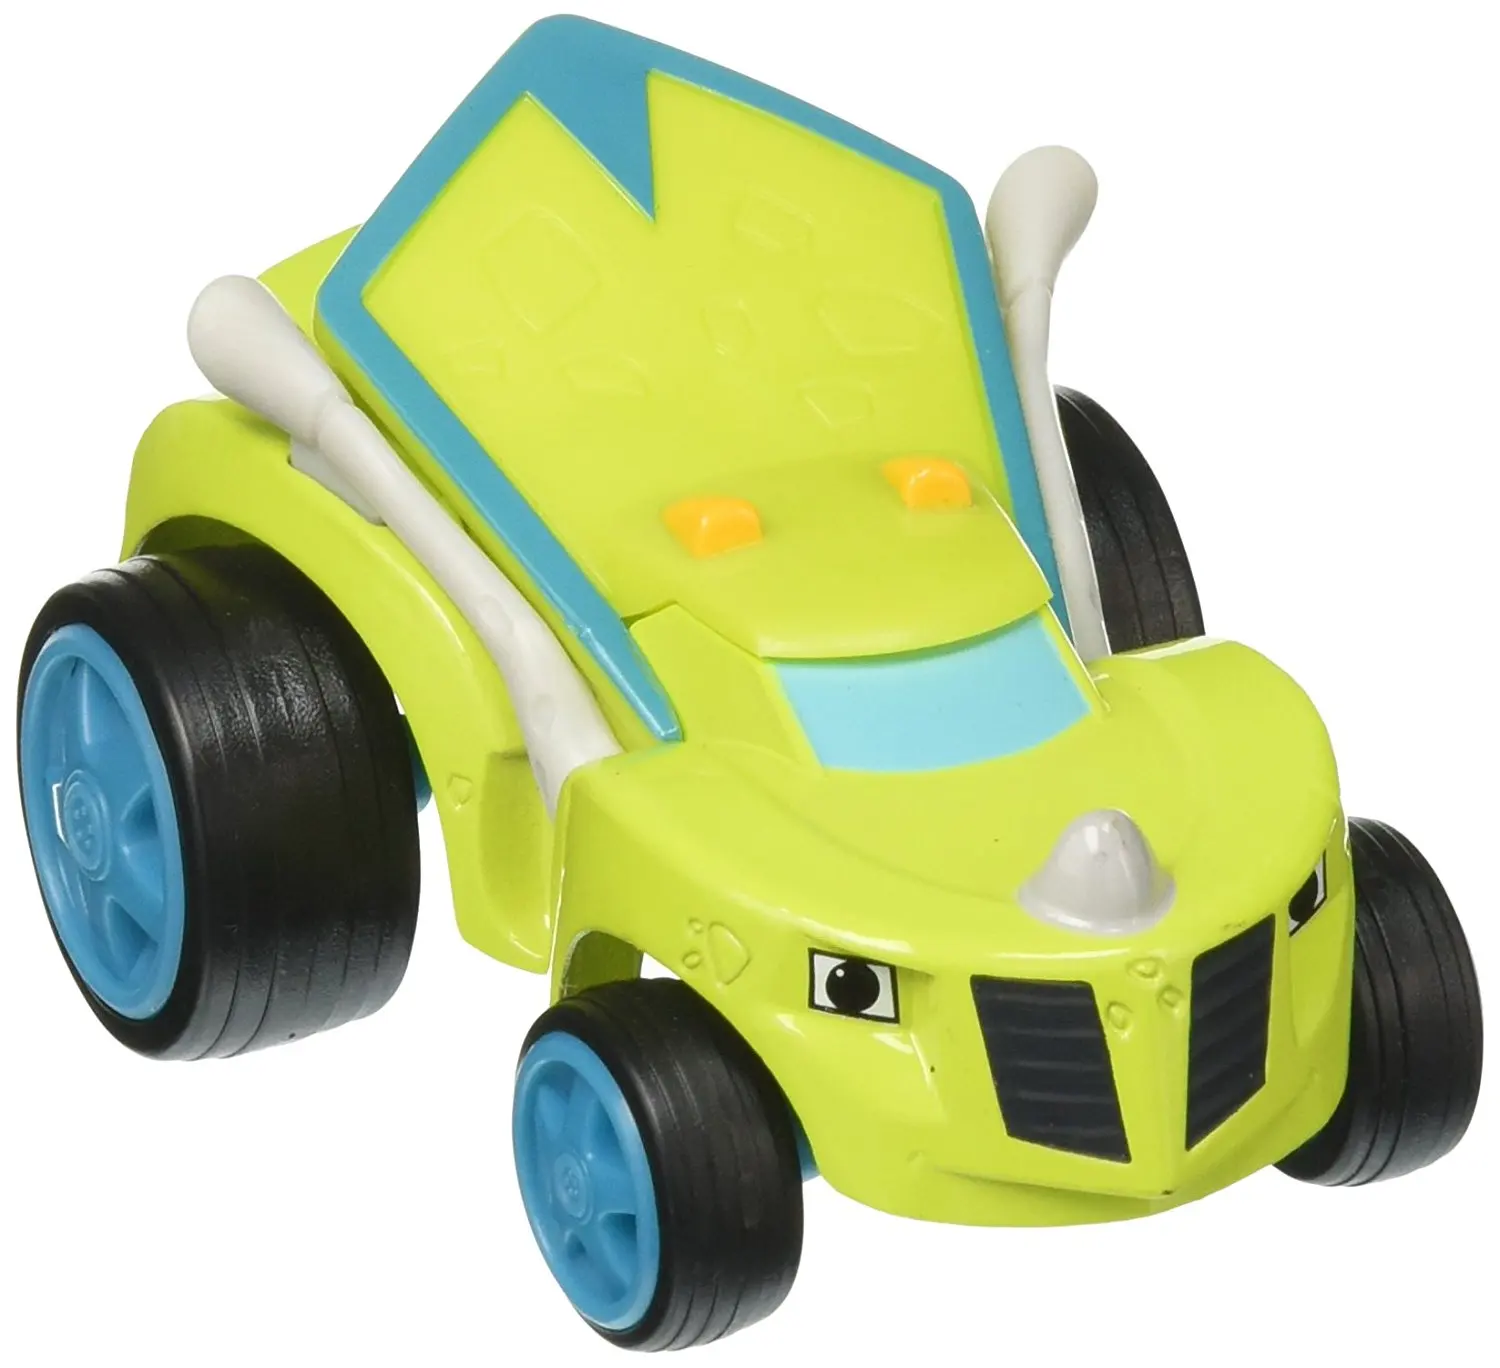 blaze racing car toy